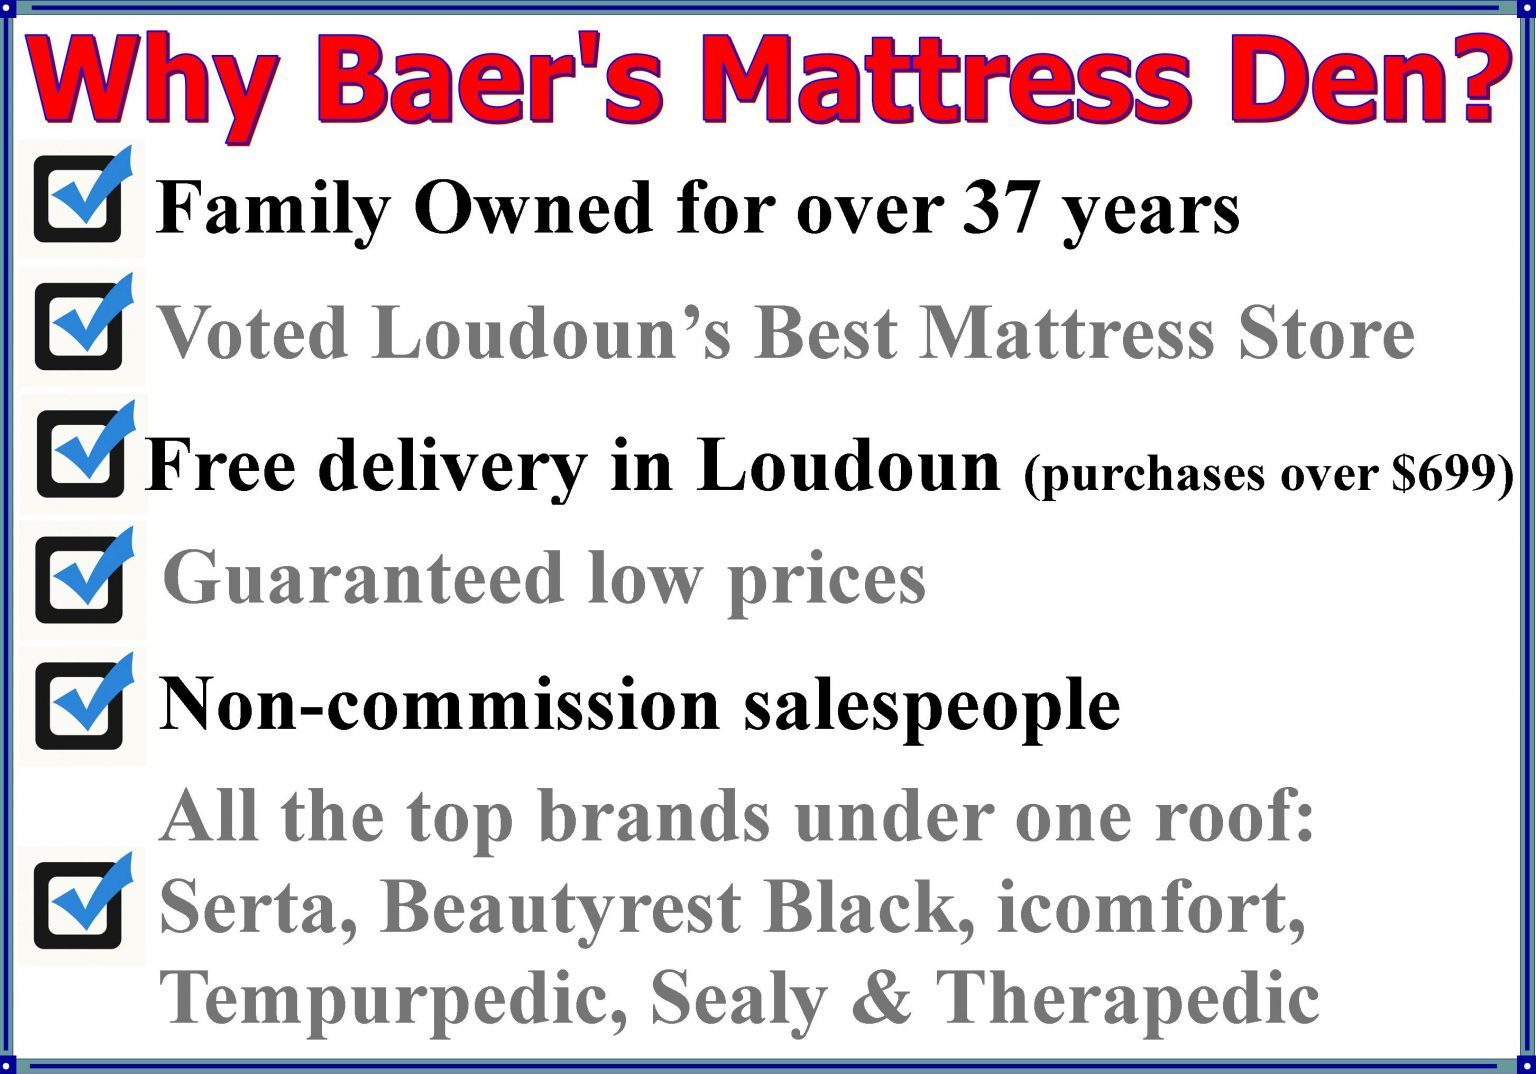 baer's mattress store leesburg